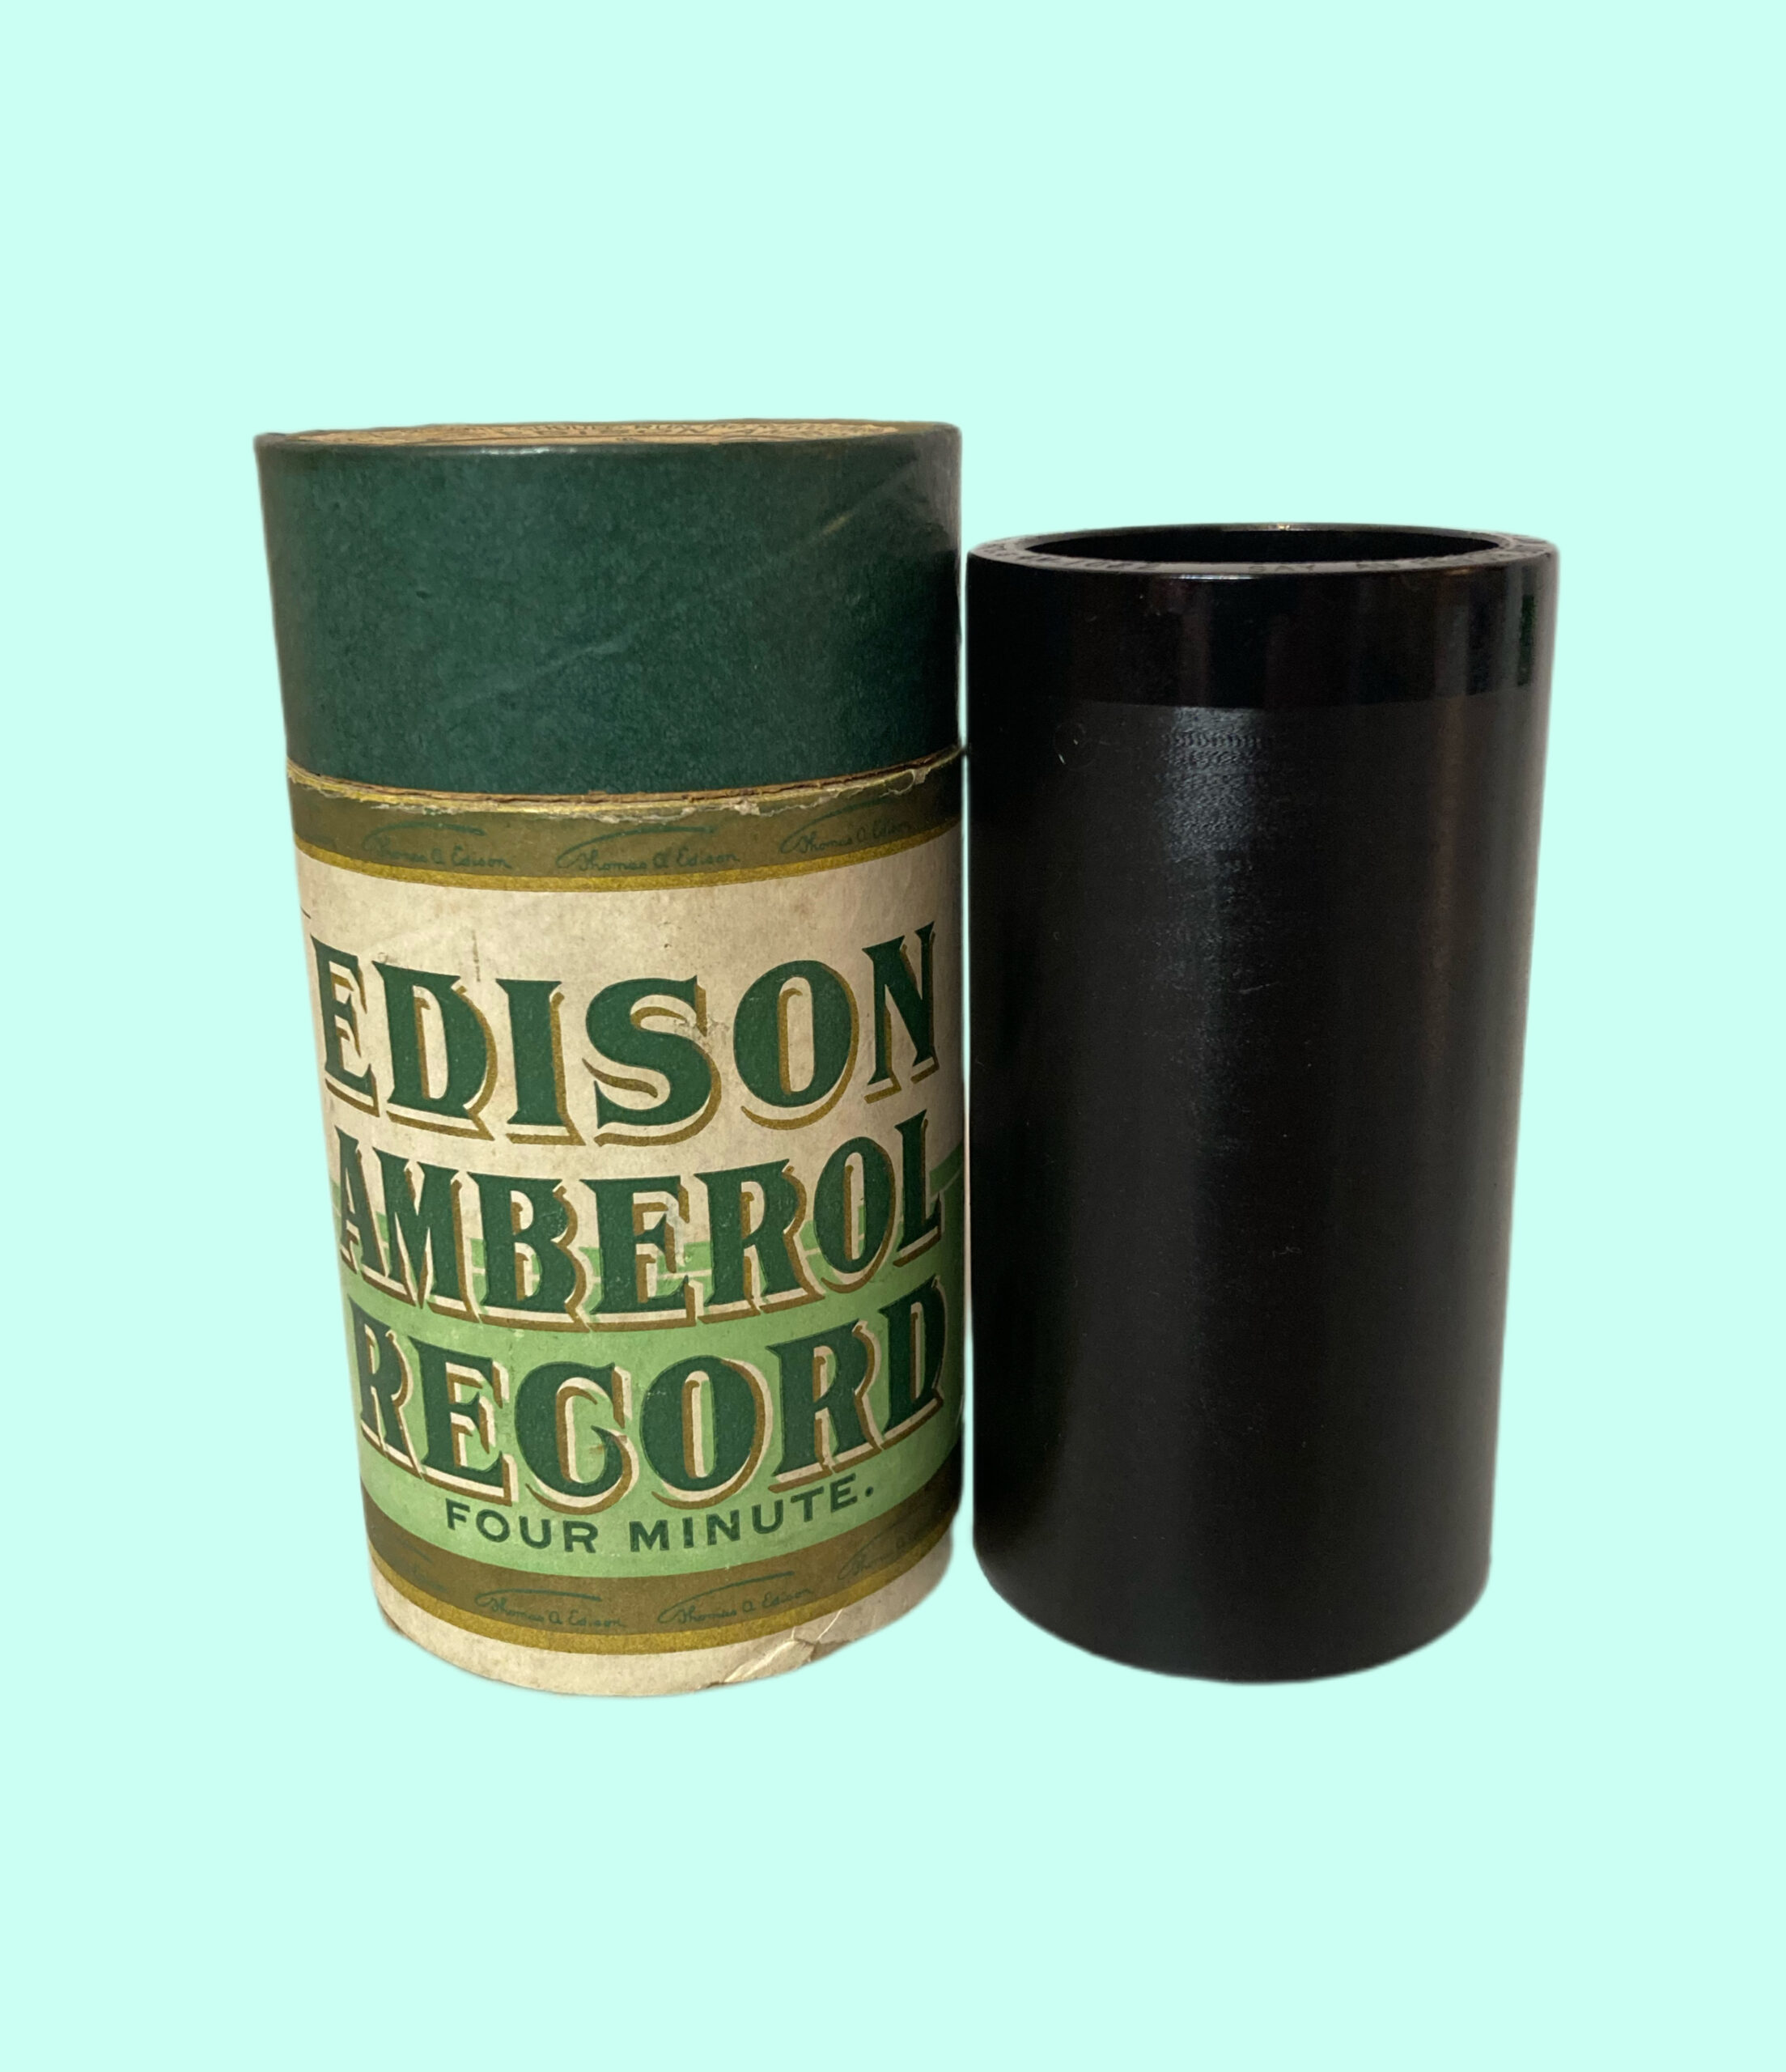 Edison 4 min. Cylinder… “ Just a Plain Little Irish Girl”